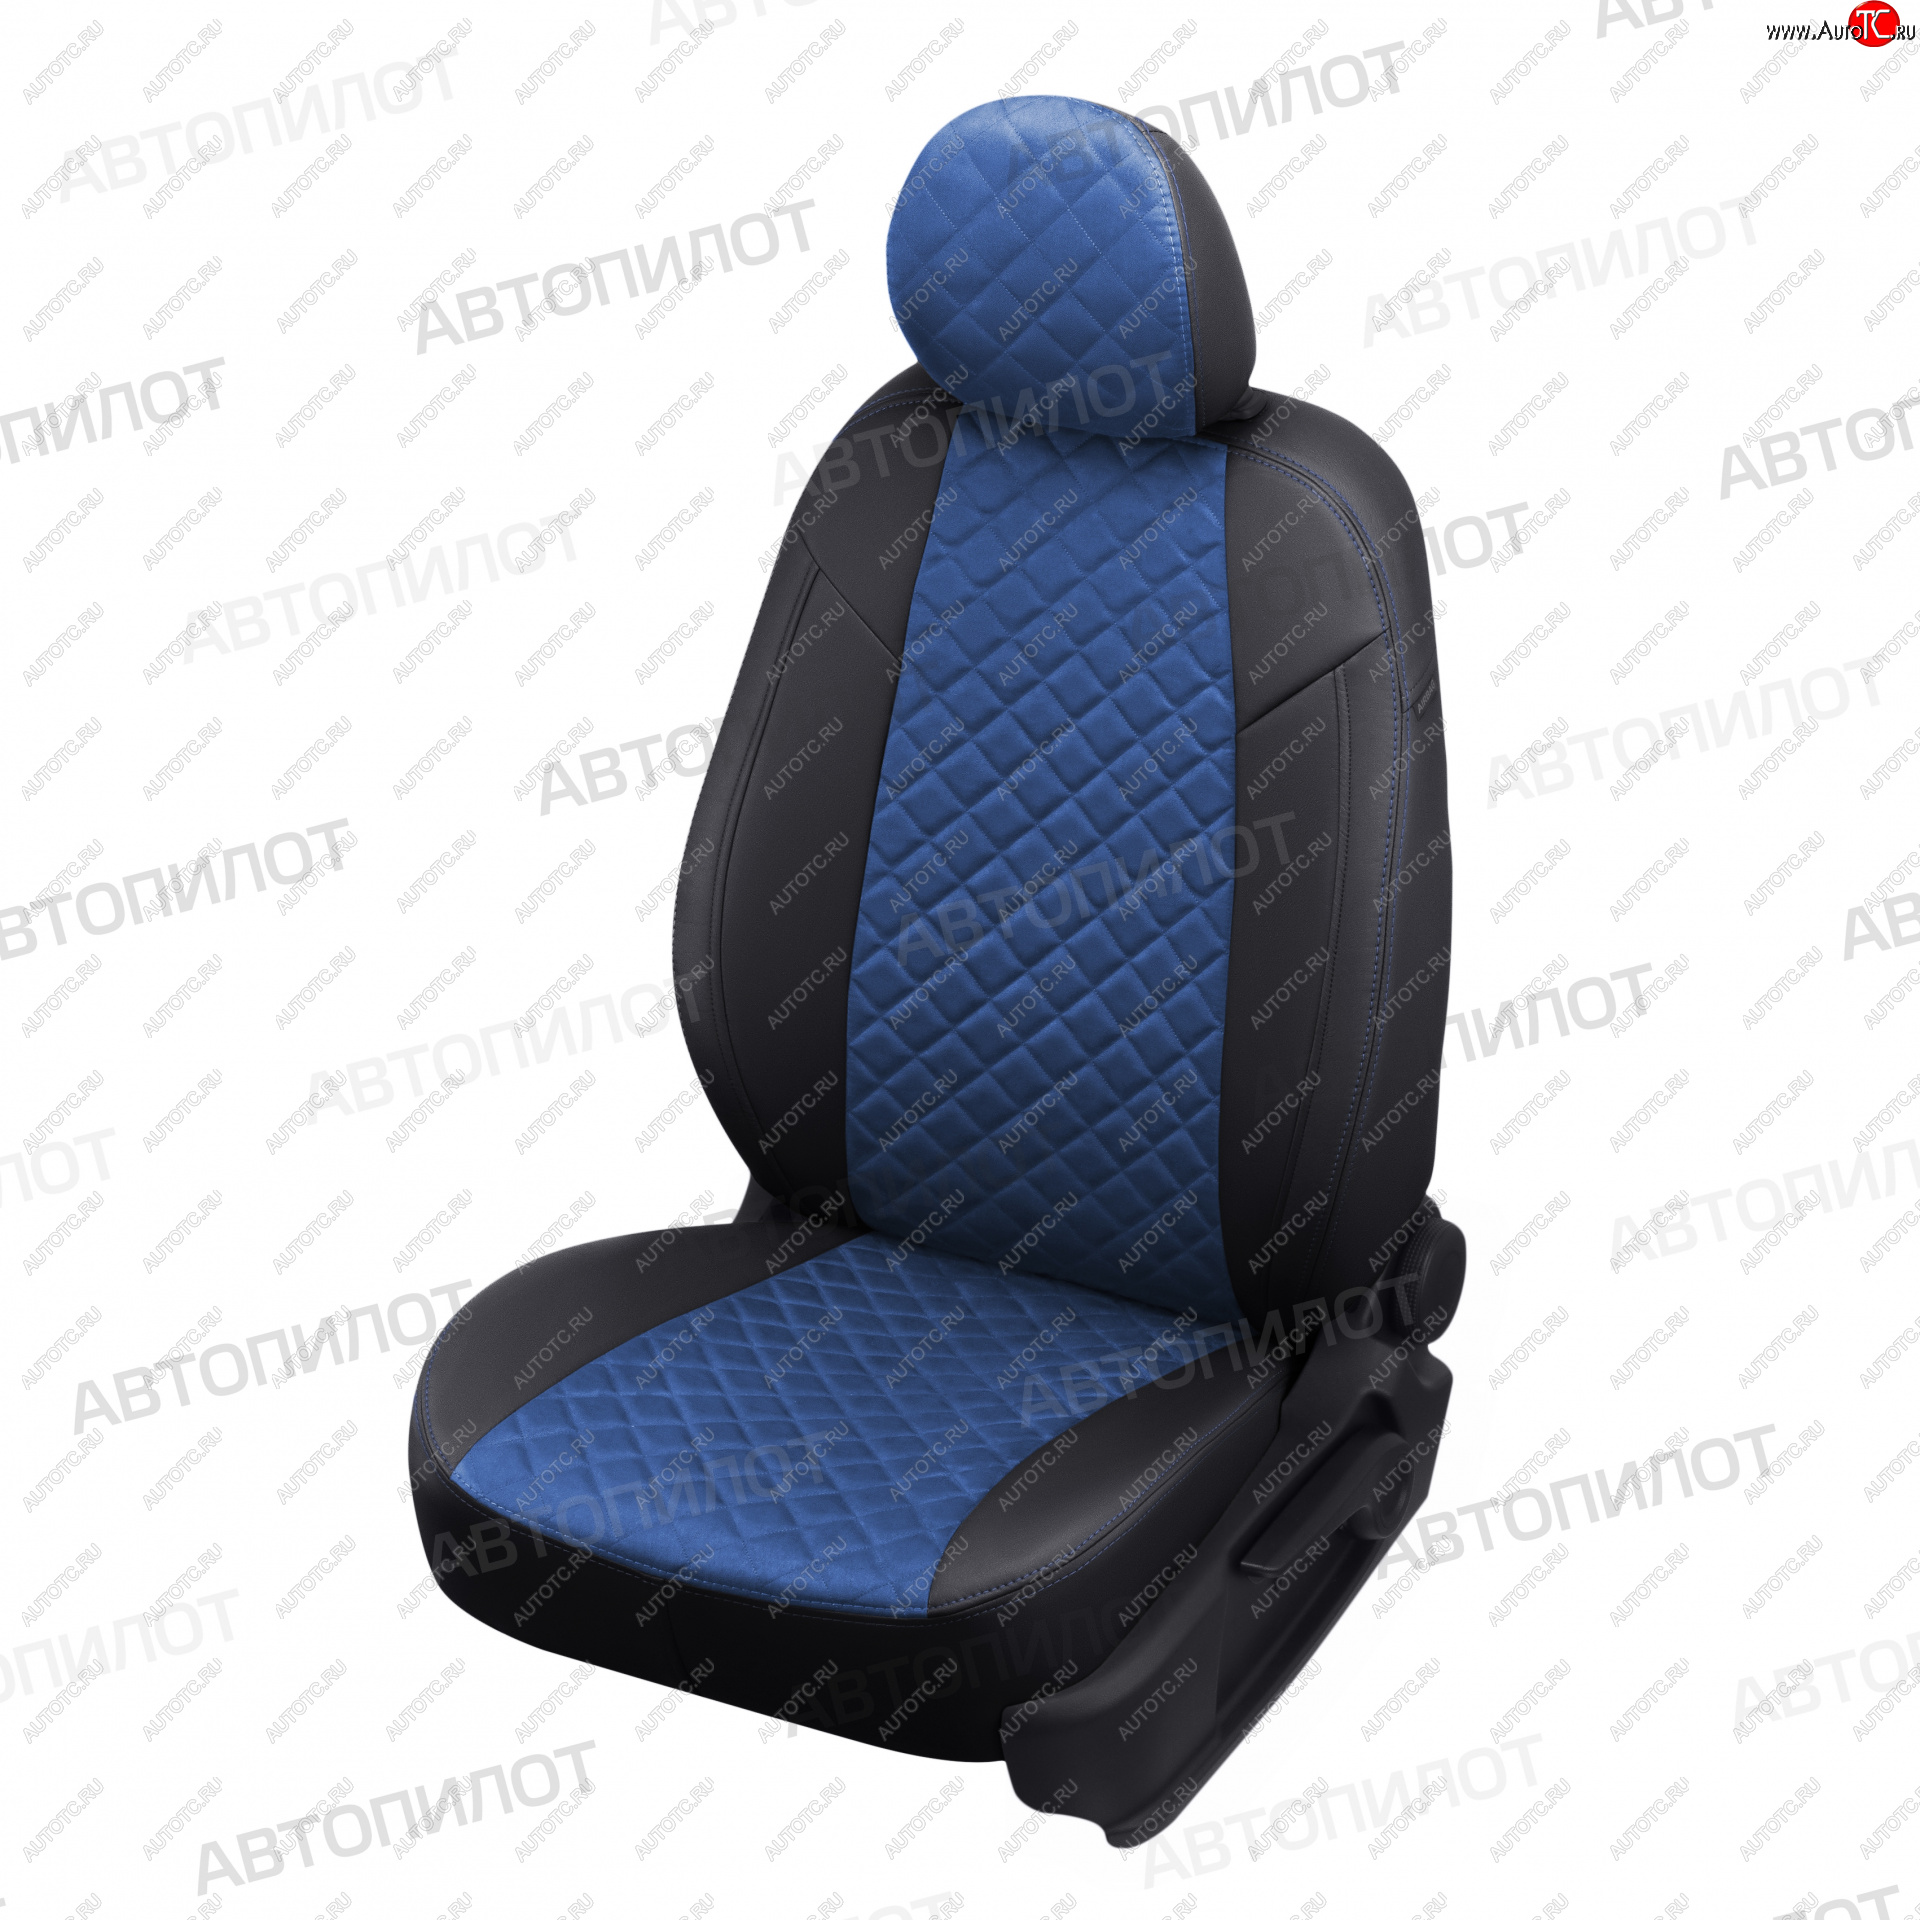 13 999 р. Чехлы сидений (экокожа/алькантара) Автопилот Ромб  KIA Cerato  1 LD (2004-2007) (черный/синий)